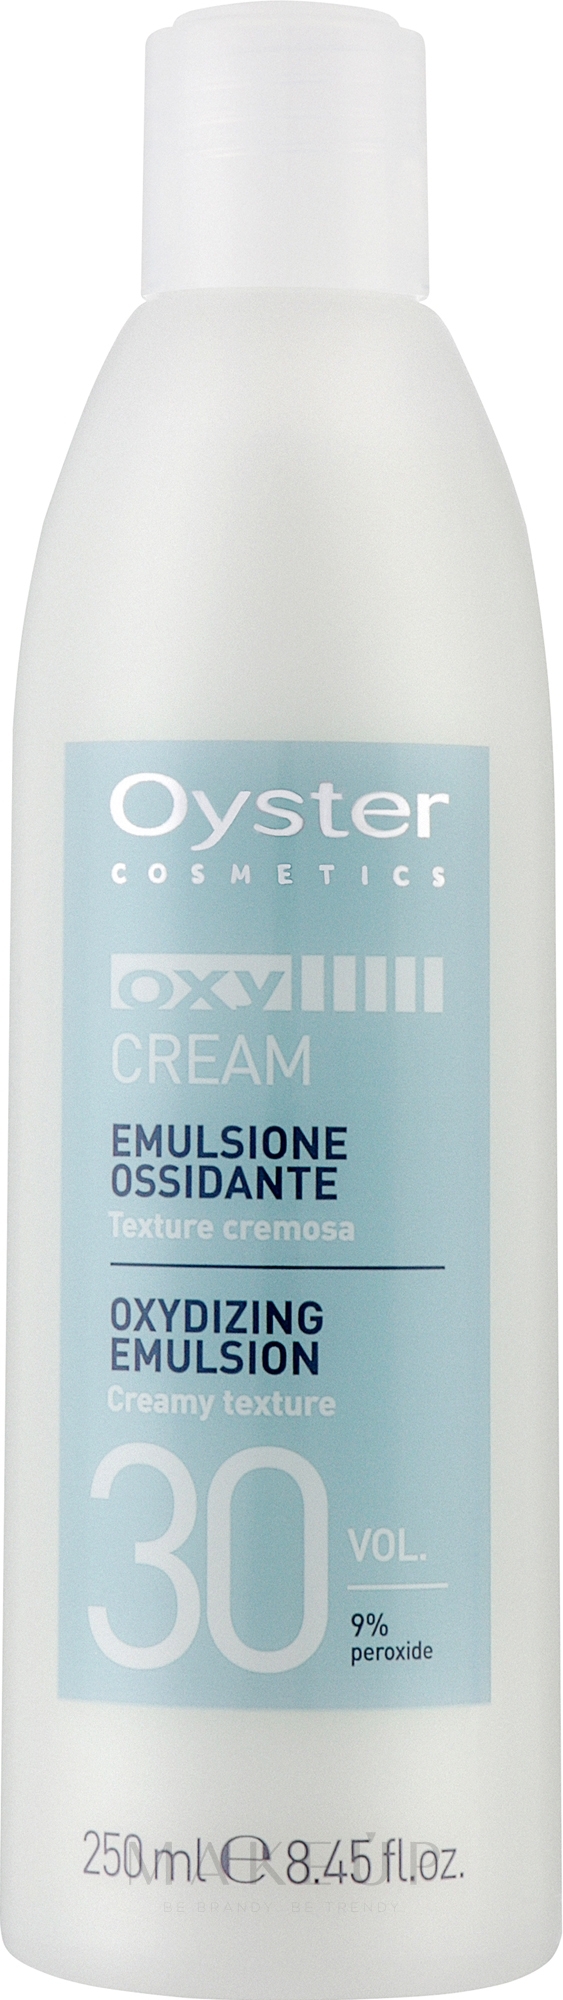 Oxidationsmittel 30 Vol 9% - Oyster Cosmetics Oxy Cream Oxydant — Bild 250 ml